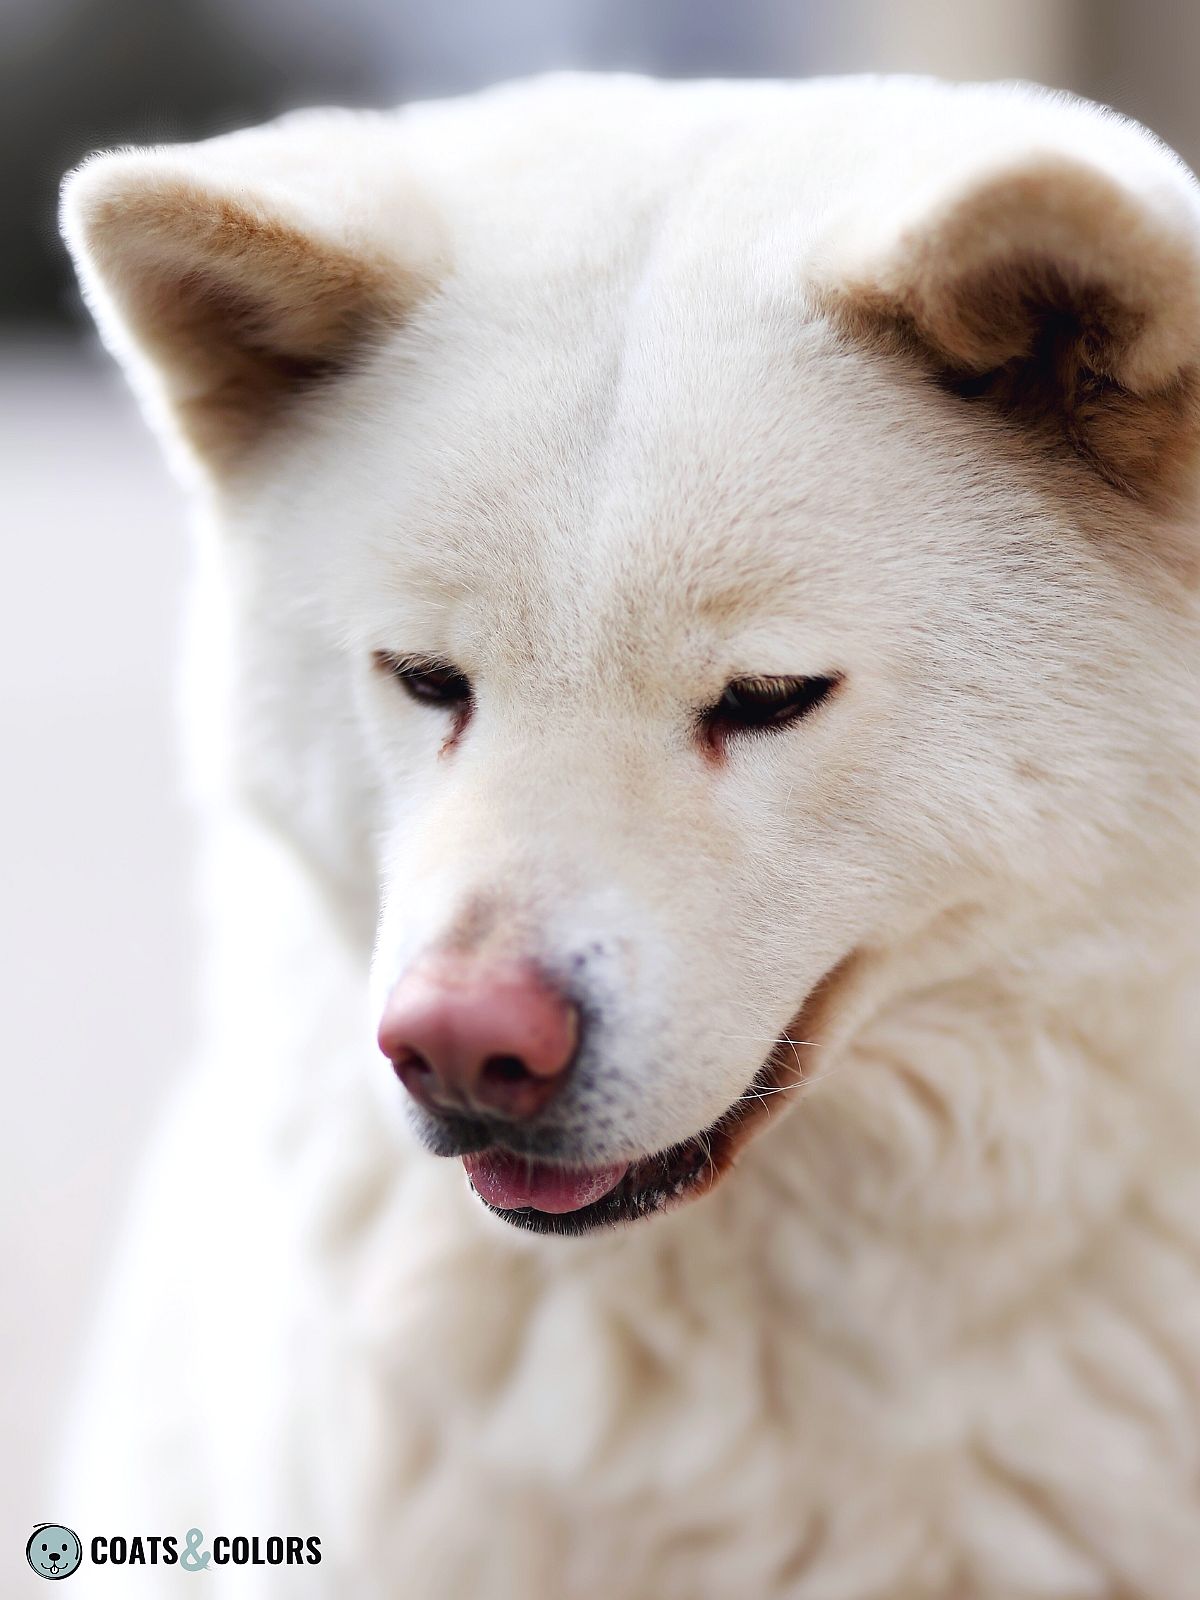 Japanese Akita Inu Coat Colors white dog